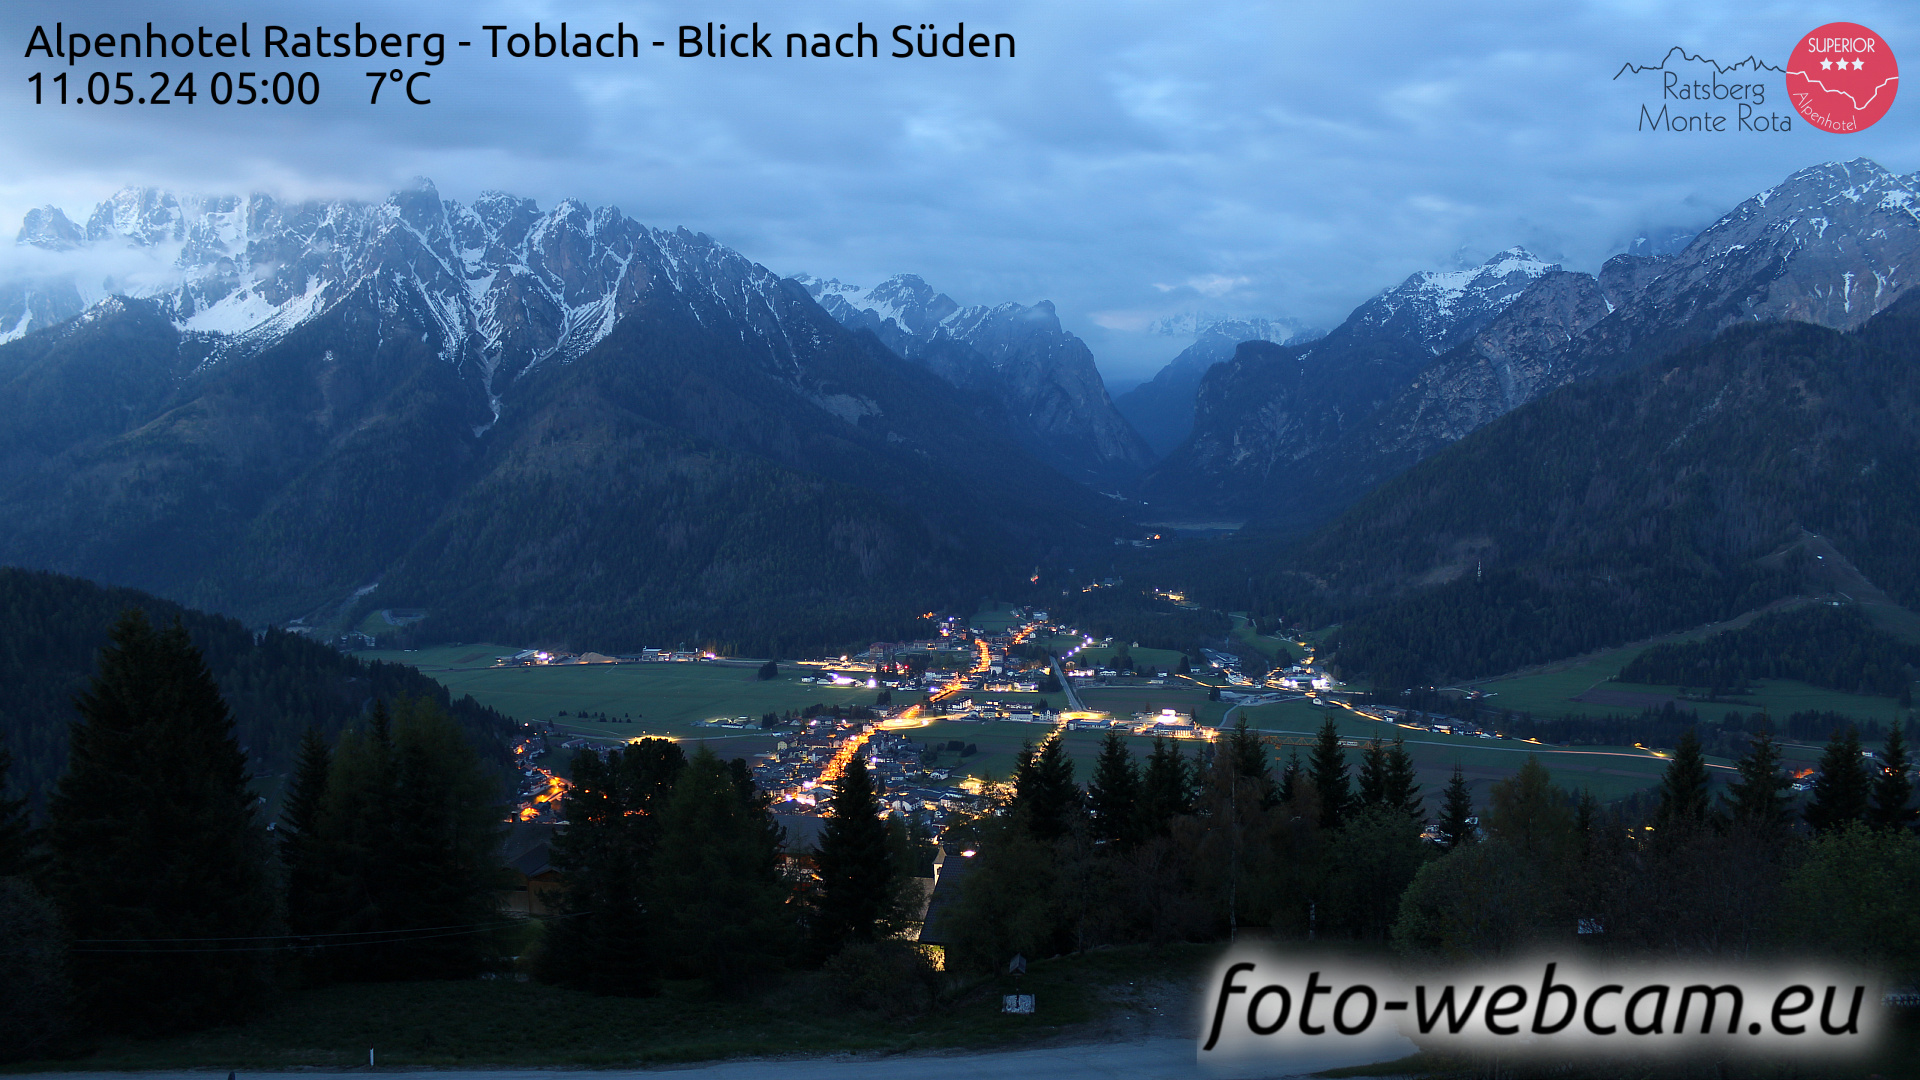 Toblach (Dolomites) Thu. 05:03